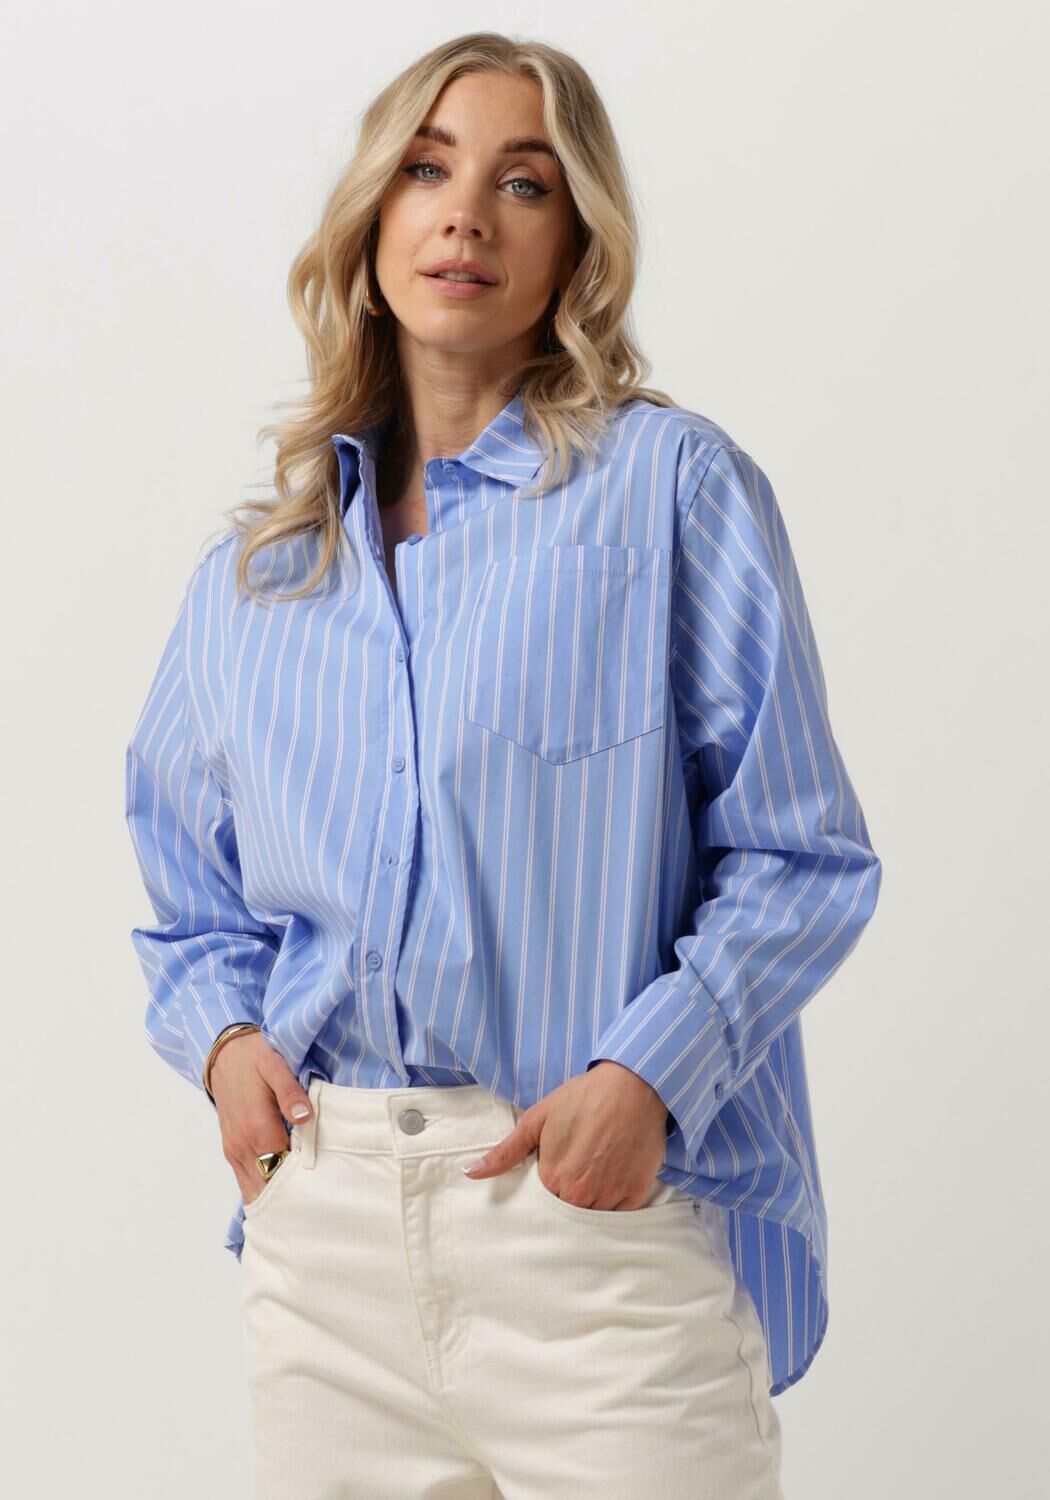 NEO NOIR Dames Blouses Dalma Double Stripe Shirt Blauw wit Gestreept